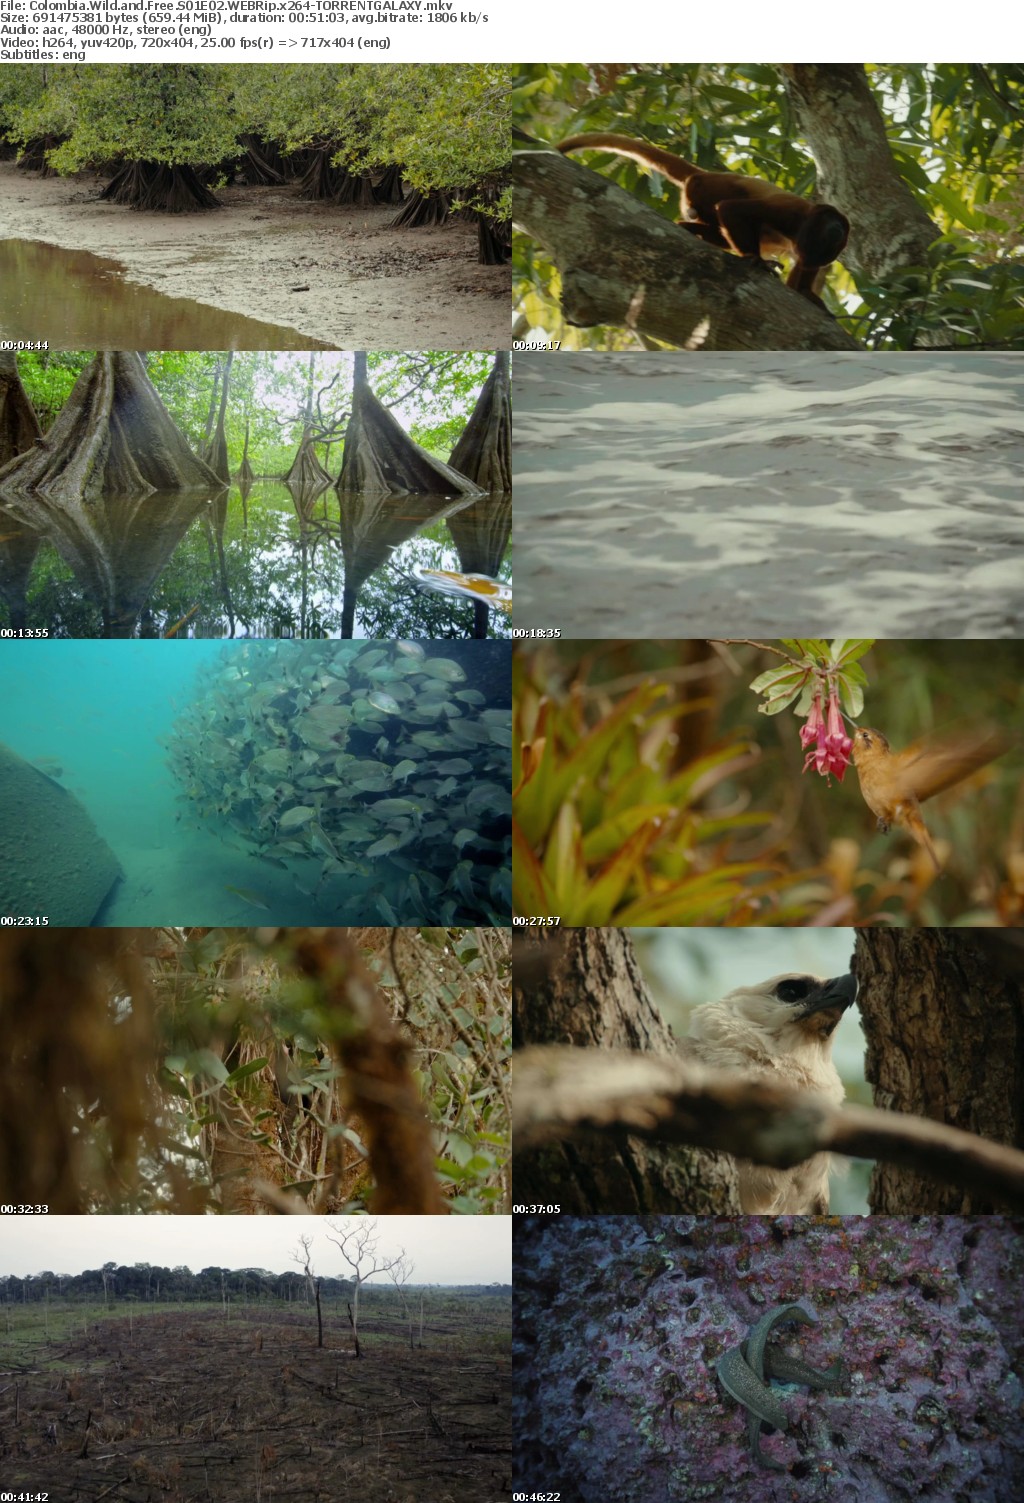 Colombia Wild and Free S01E02 WEBRip x264-GALAXY